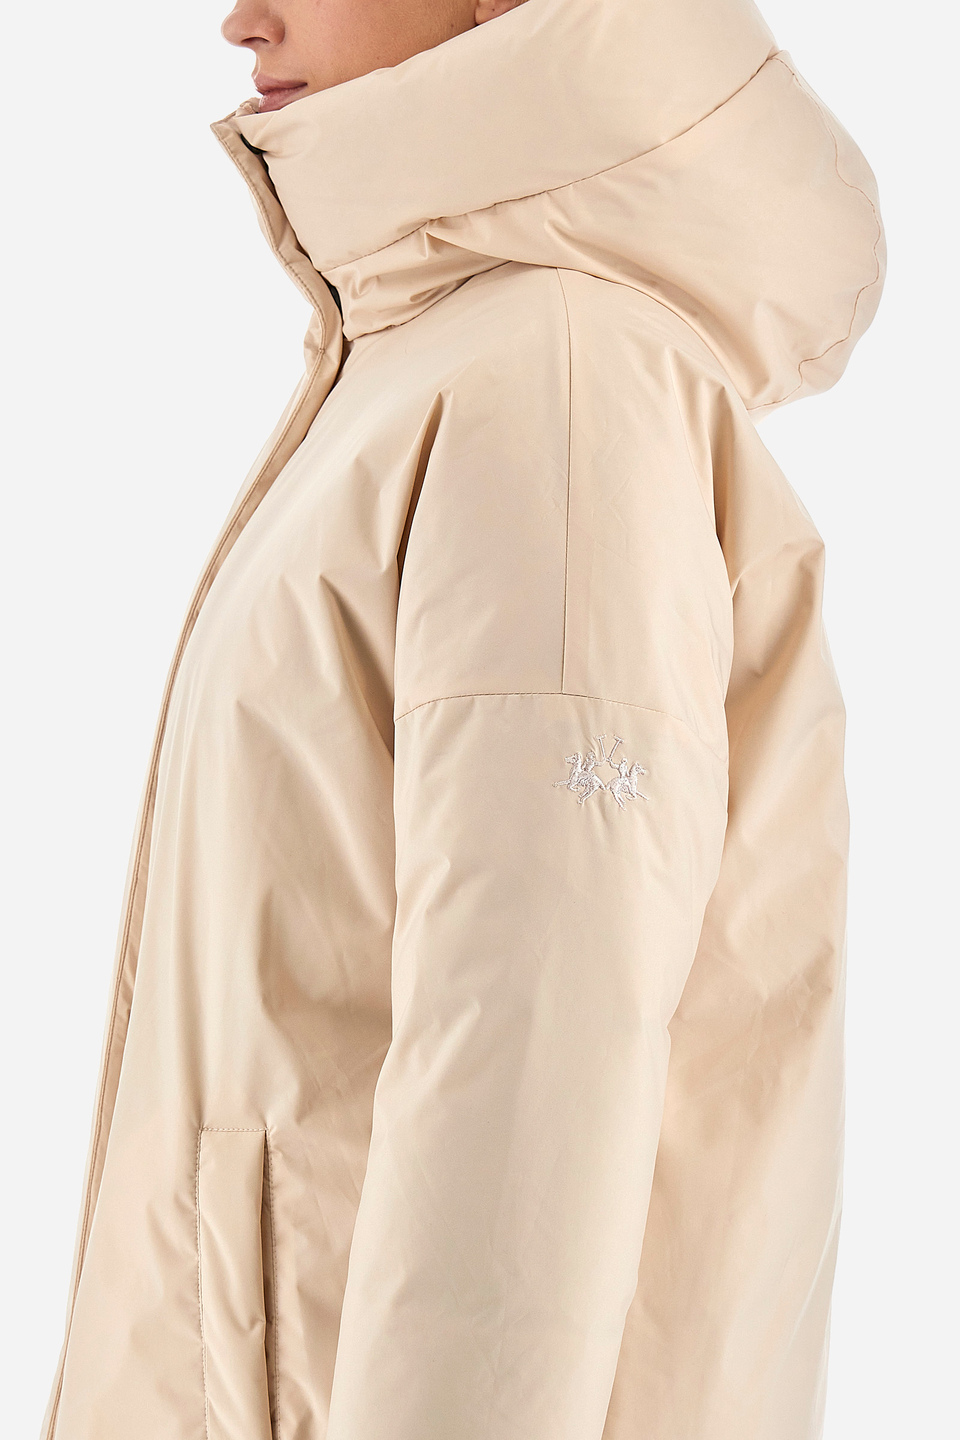 Outdoor giacca a vento donna regular fit - Weslie | La Martina - Official Online Shop